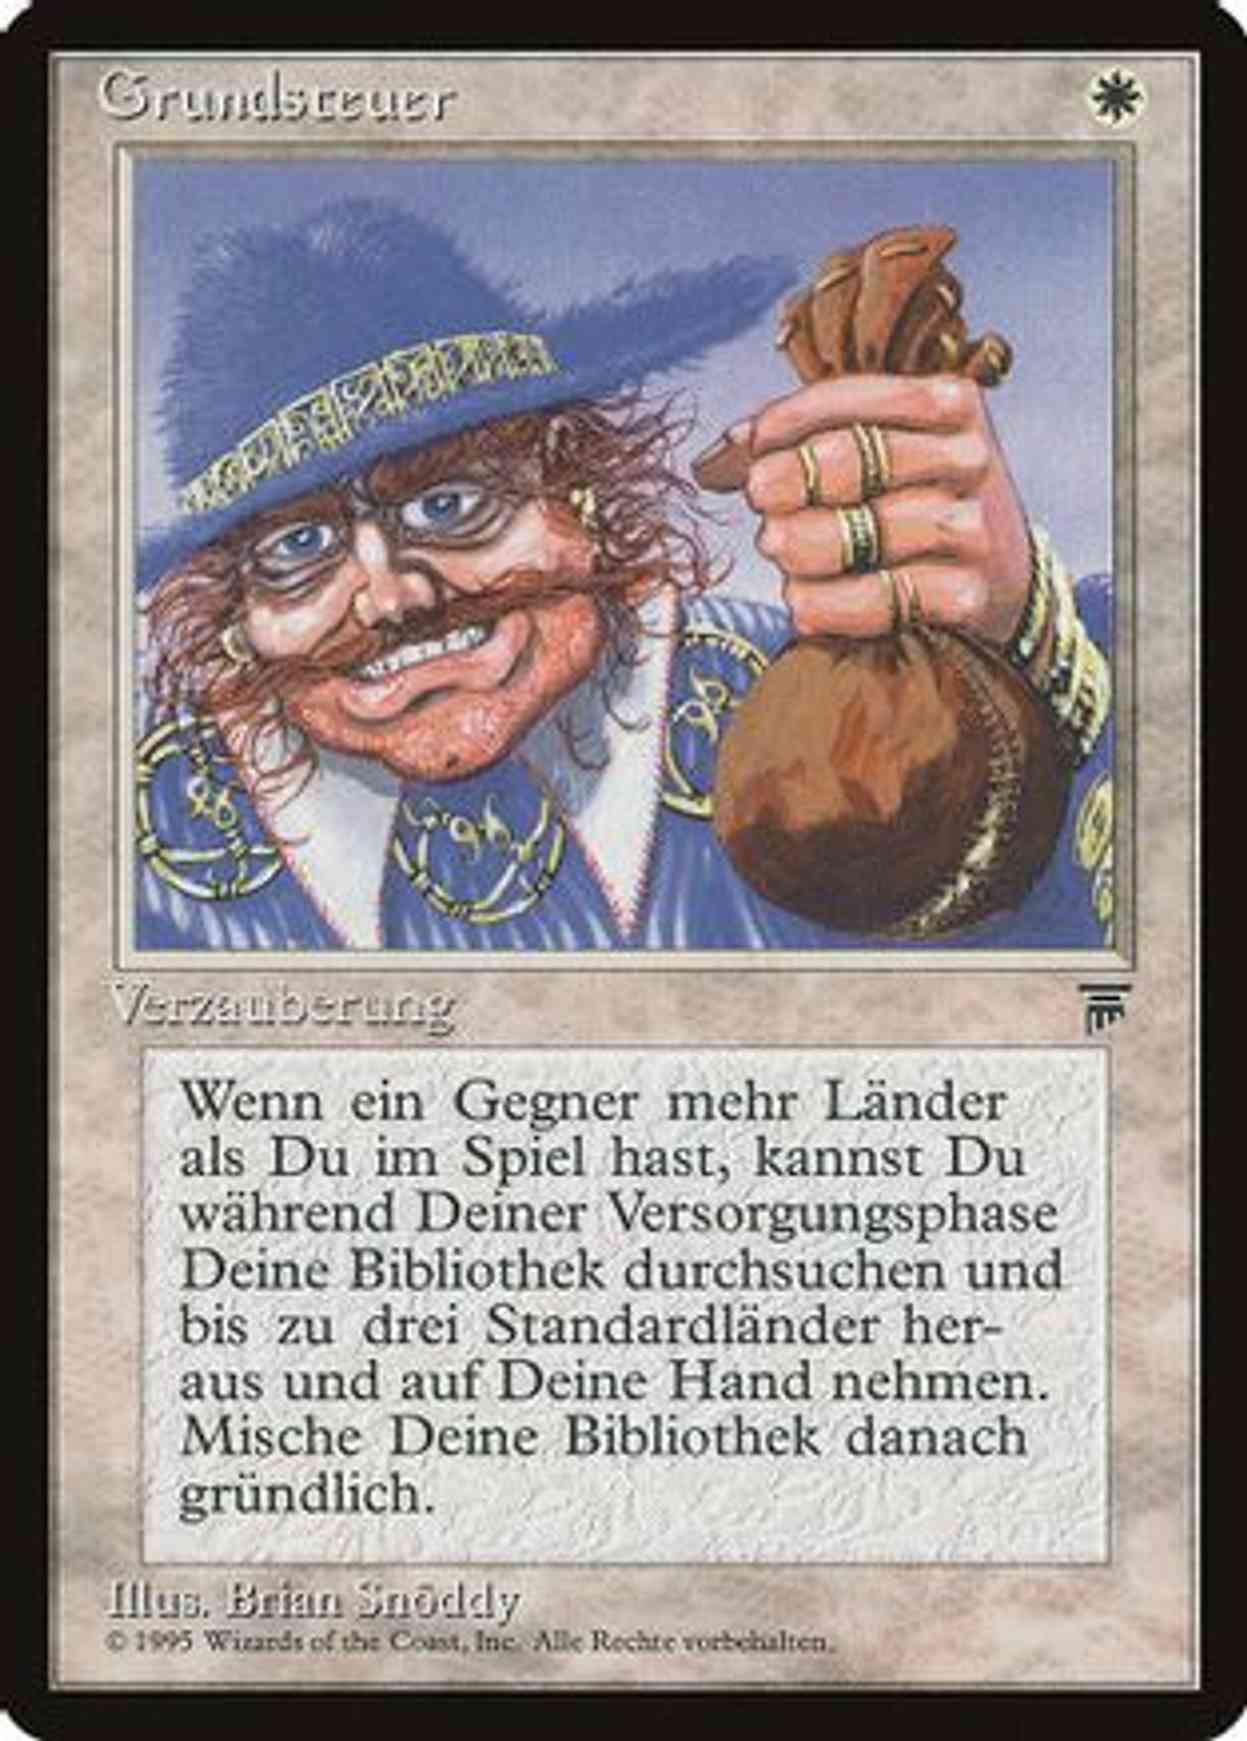 Land Tax (German) - "Grundsteuer" magic card front